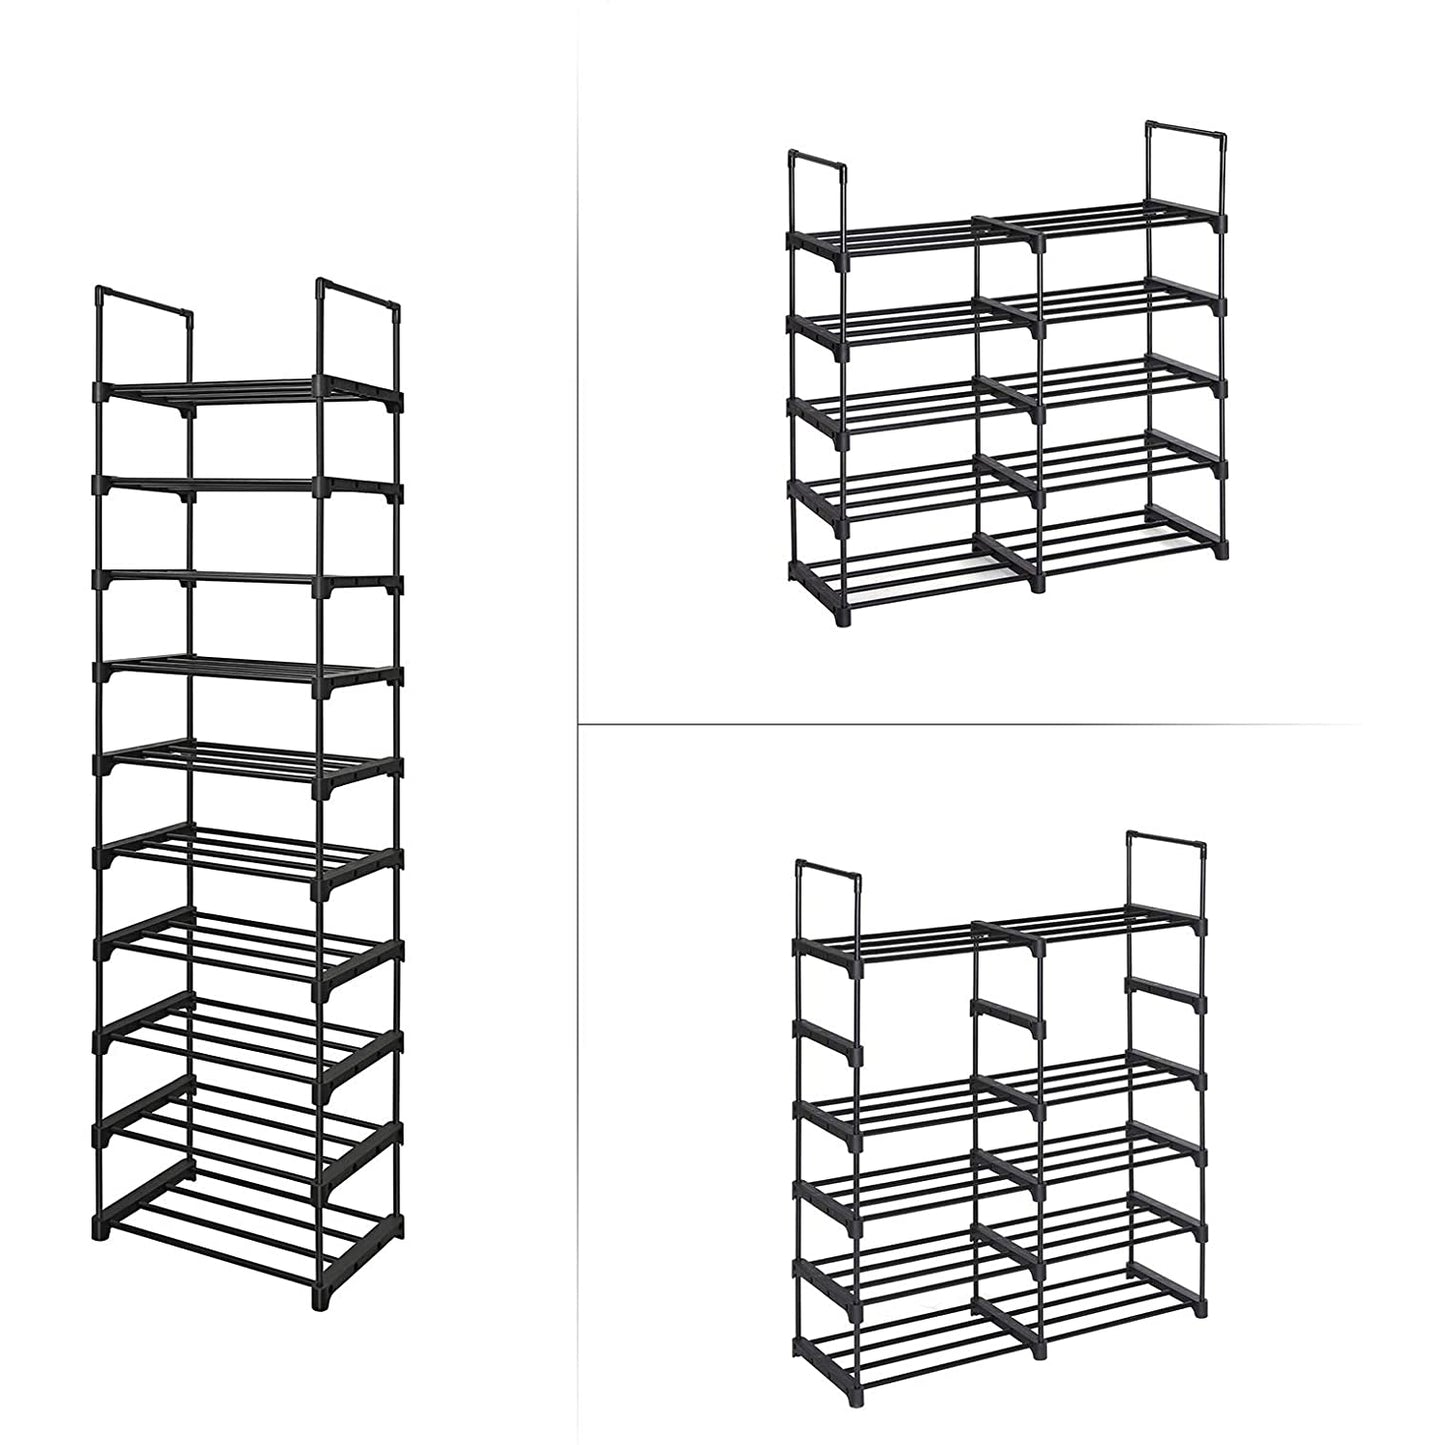 Nancy's Elkhart Storage Rack - 10 Levels - Shoe Cabinet - Shoe Rack - 45 x 30 x 174 cm - Black